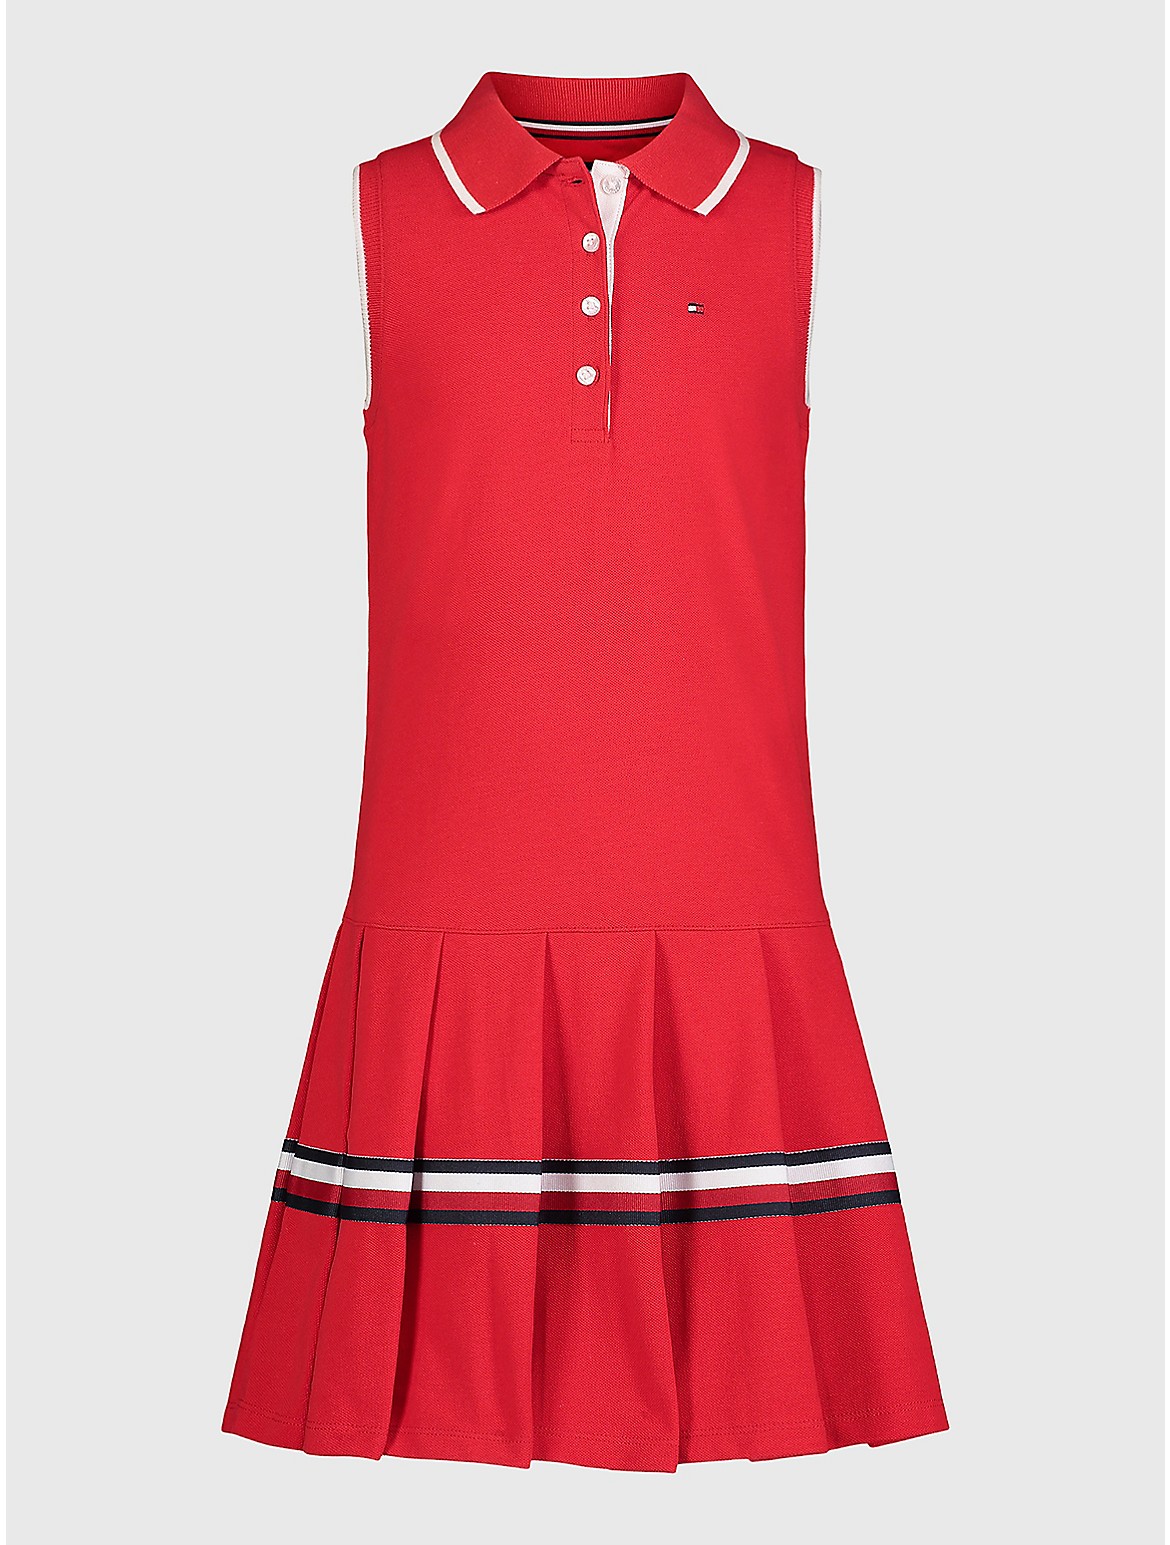 Tommy Hilfiger Girls' Big Kids' Pleated Polo Dress - Red - L